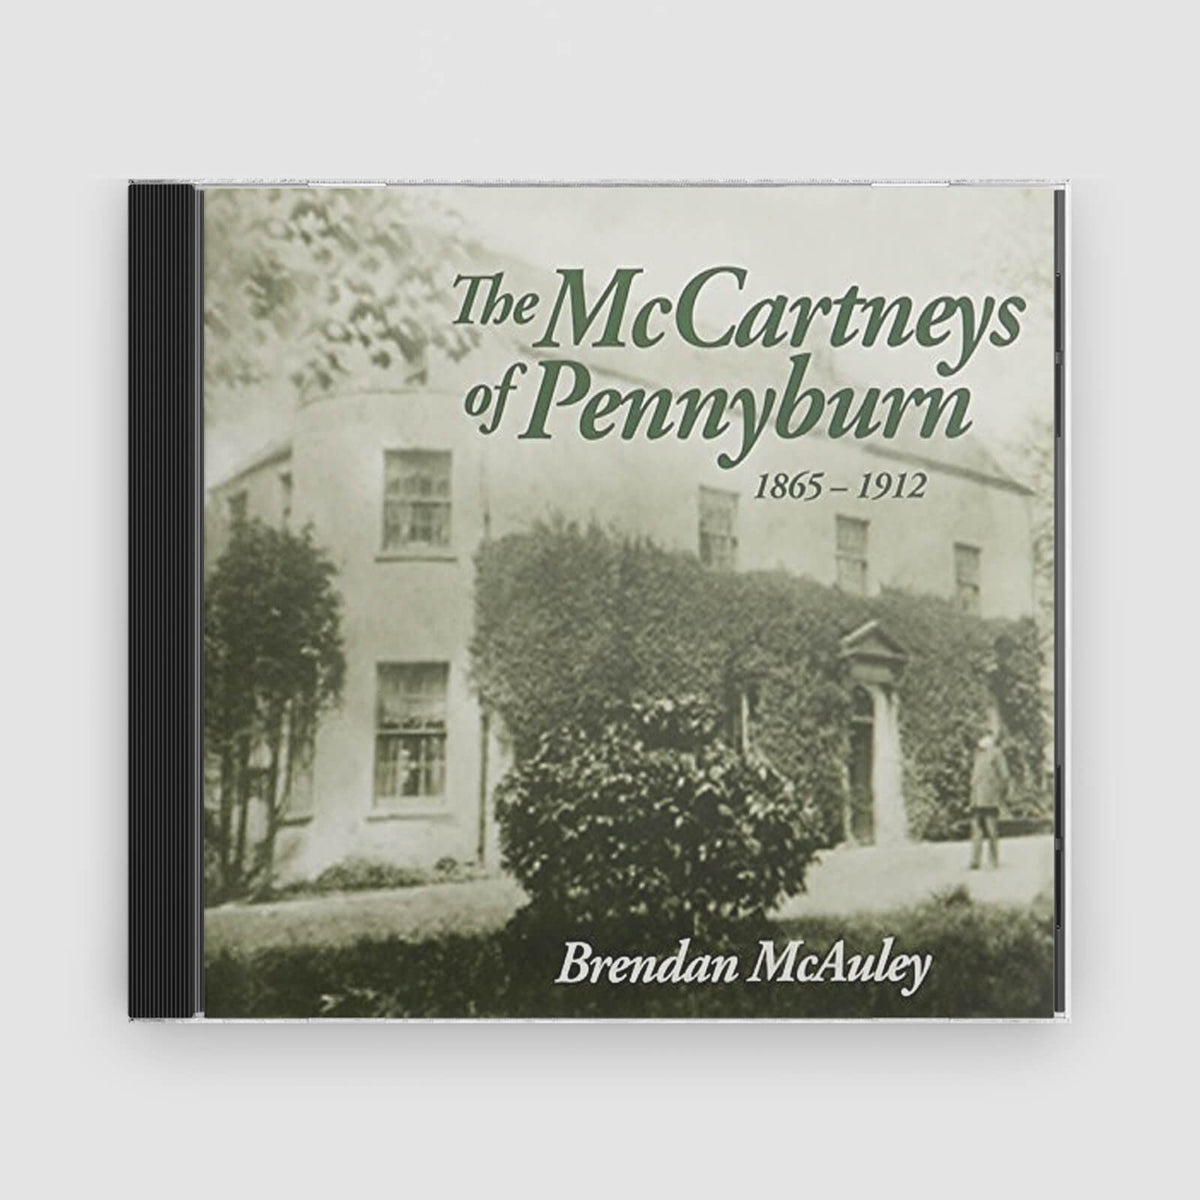 Brendan McAuley : The McCartneys of Pennyburn